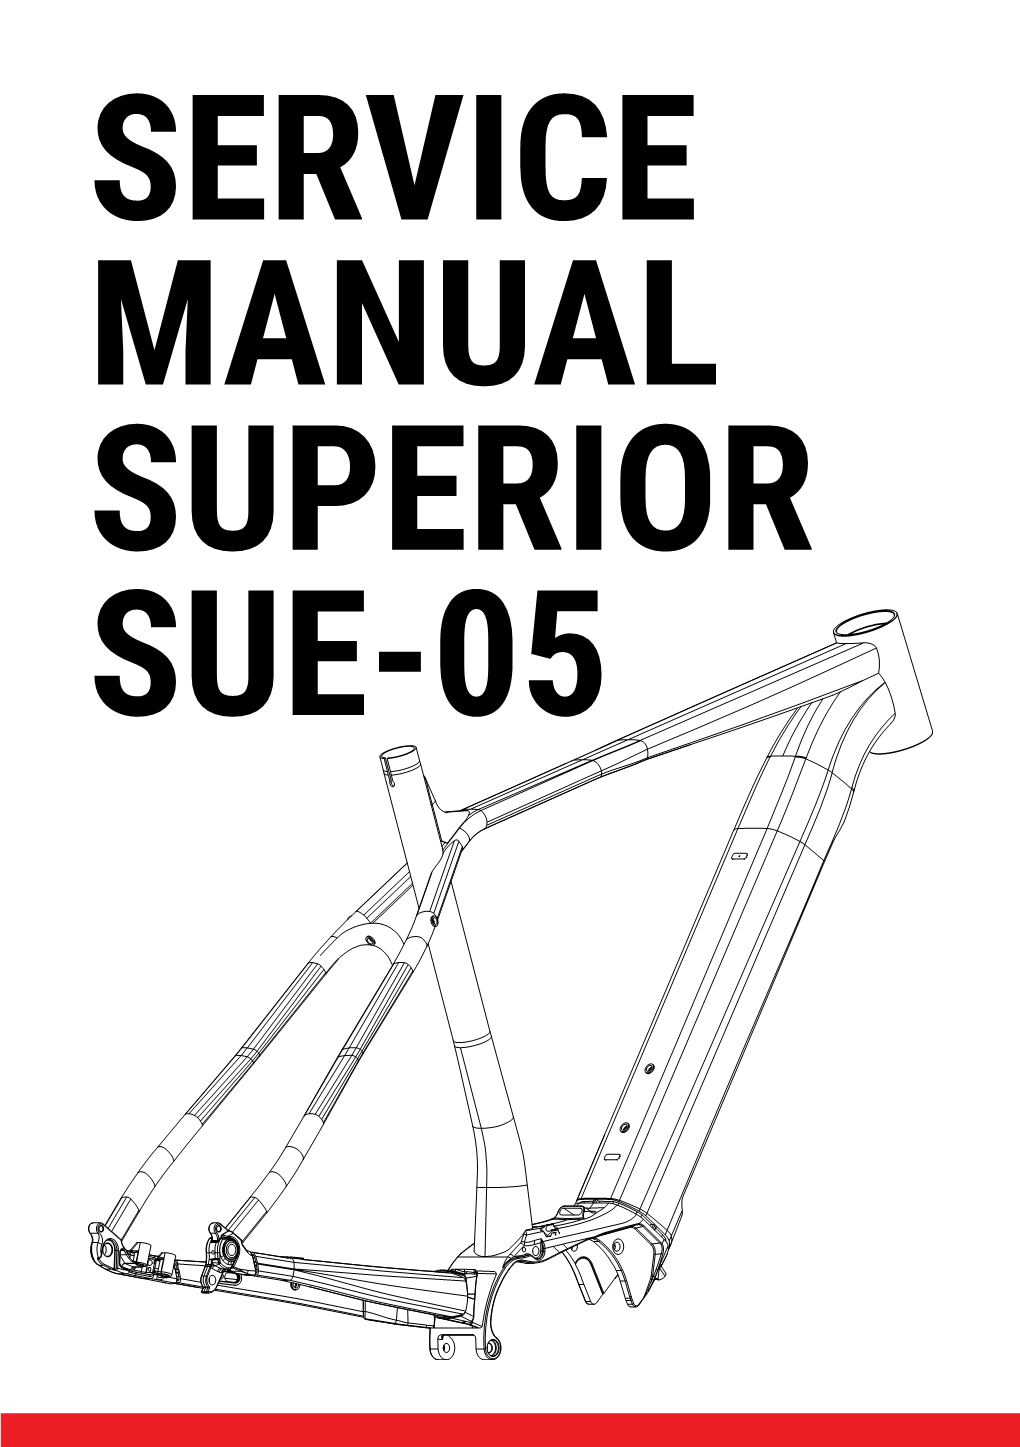 Service Manual & Spare Parts